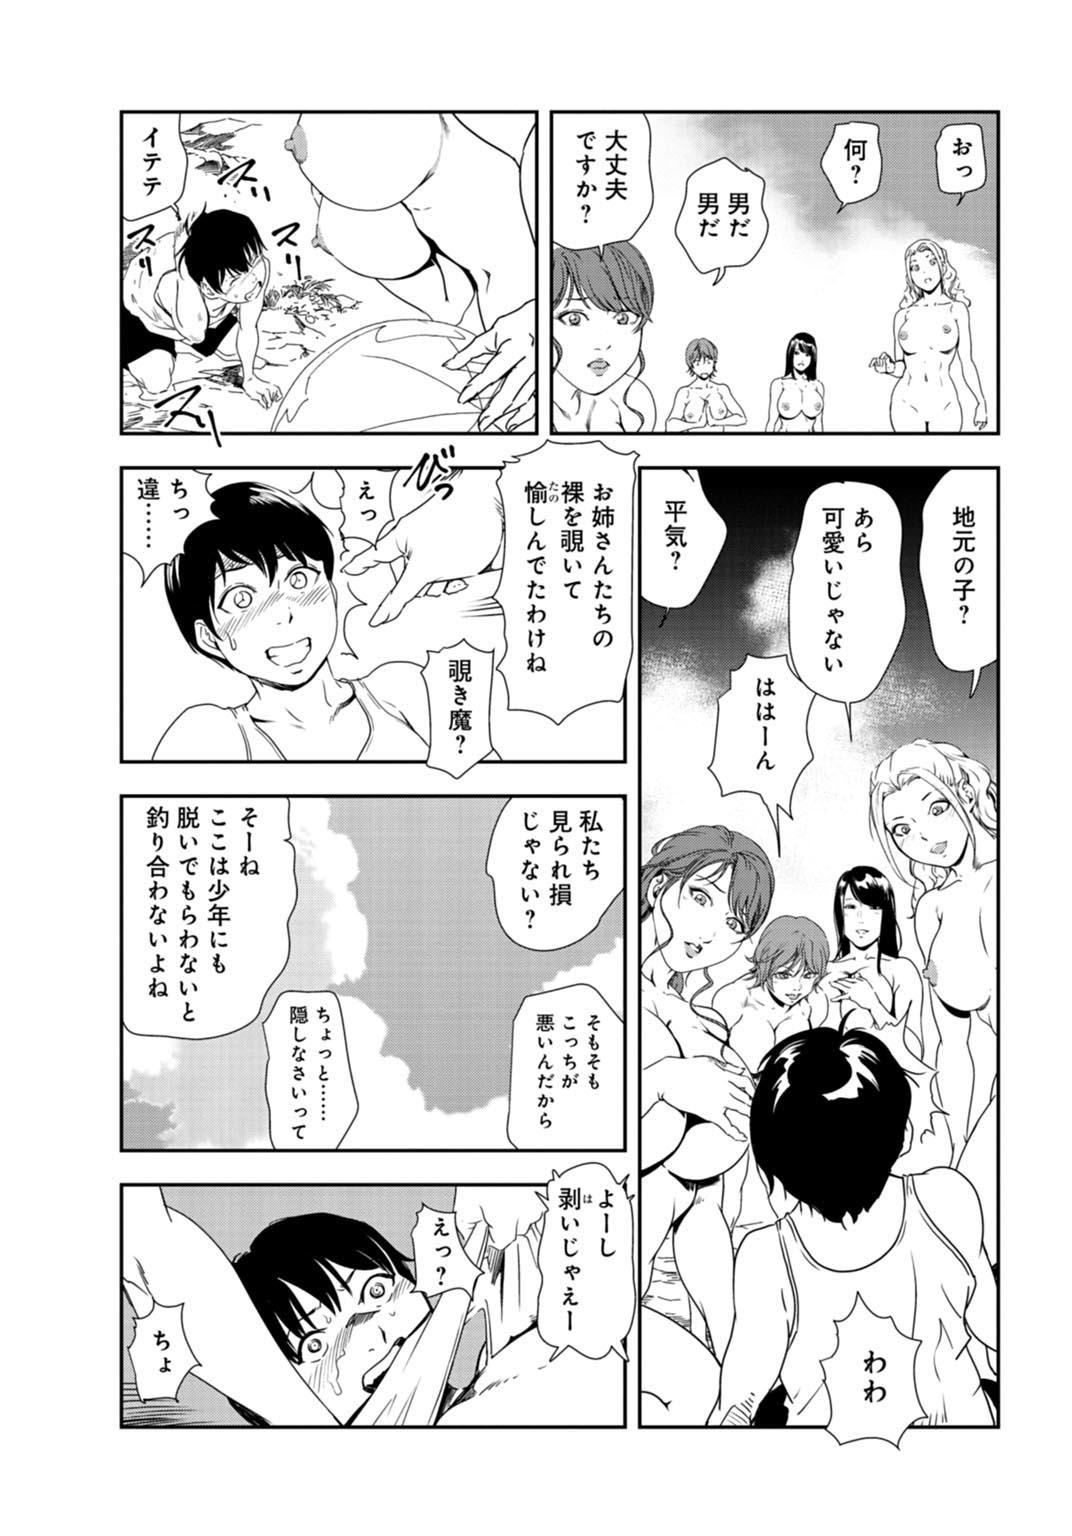 Wank Nikuhisyo Yukiko 31 Chastity - Page 8